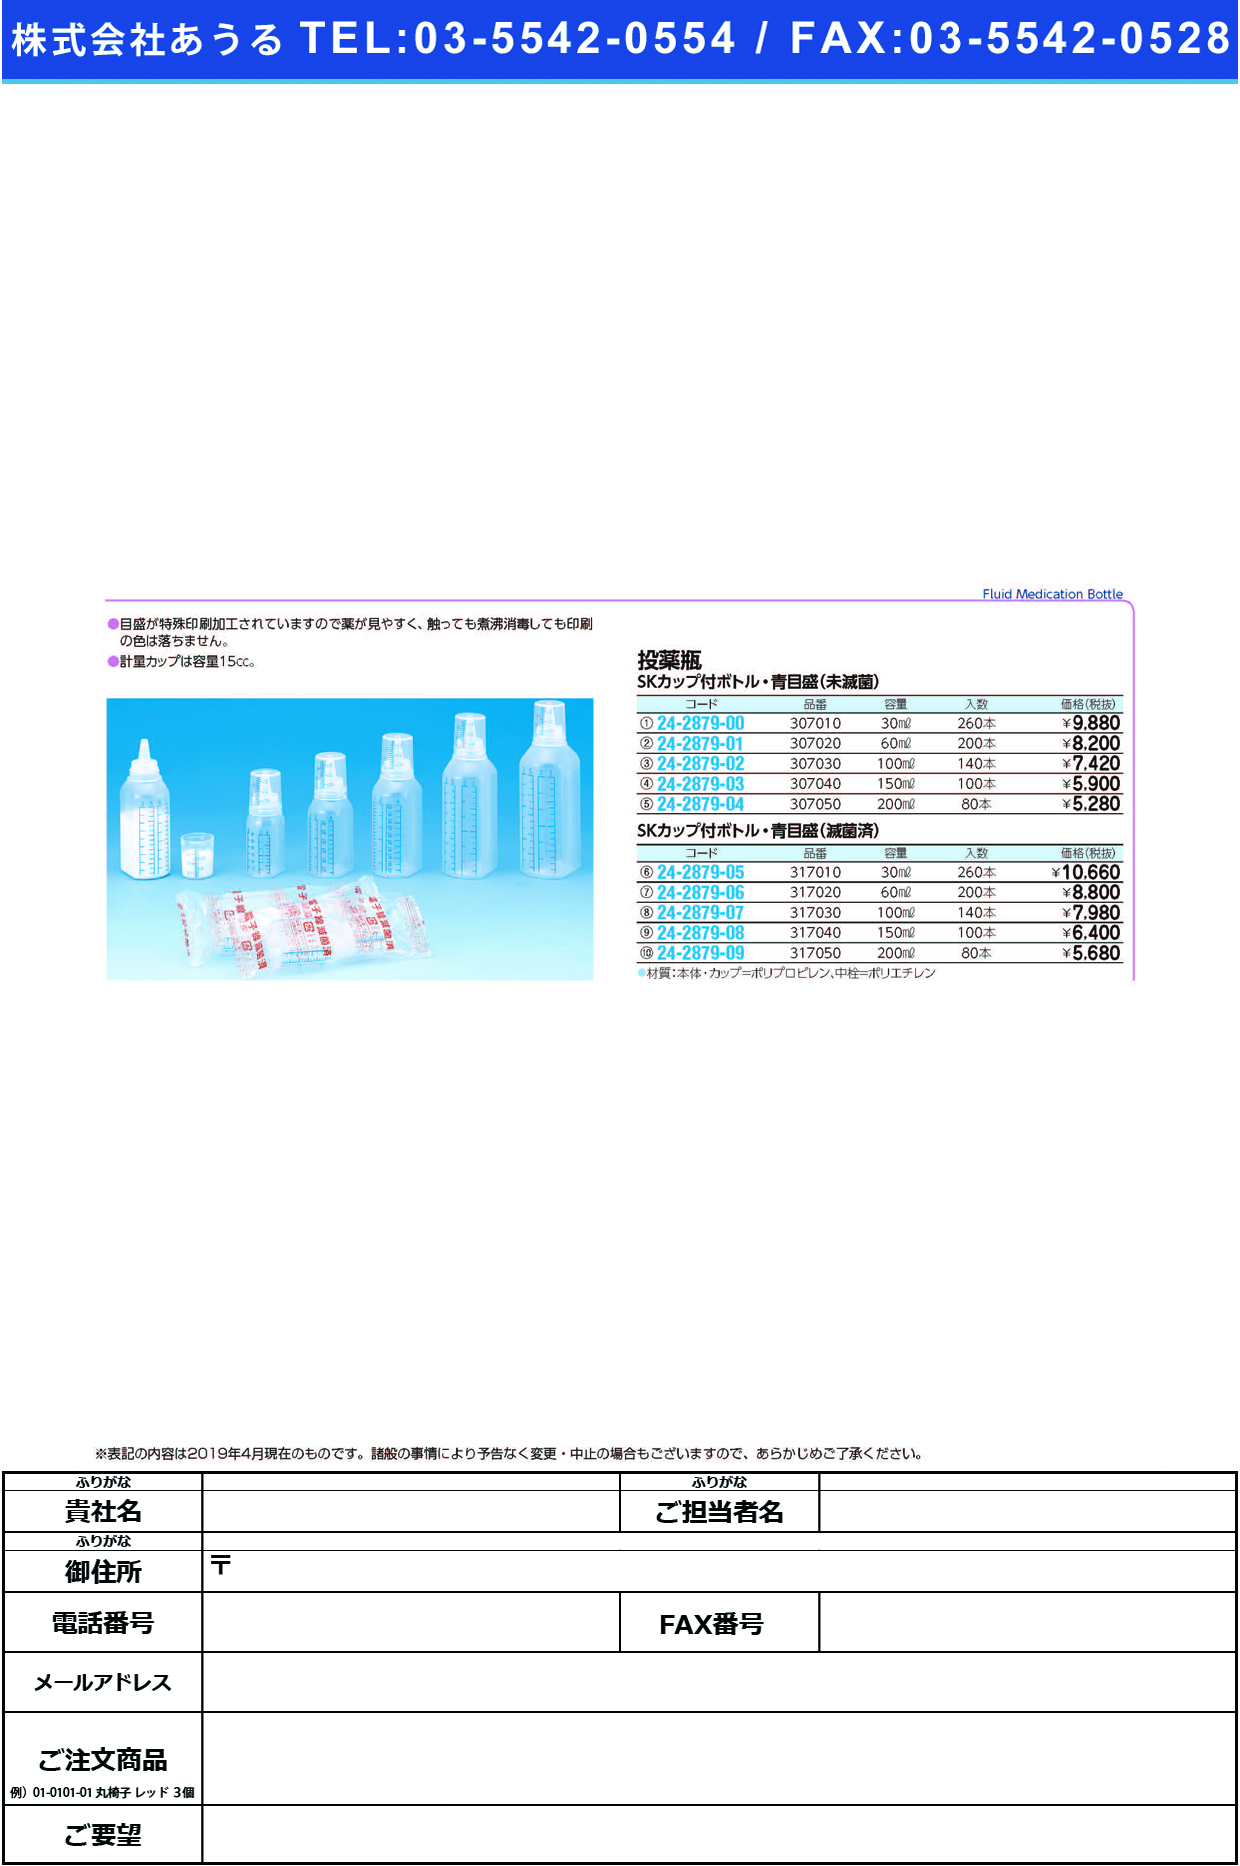 (24-2879-06)ＳＫカップ付ボトル青目盛（滅菌済） 60ML(200ﾎﾝｲﾘ) SKｶｯﾌﾟﾂｷﾎﾞﾄﾙﾒｯｷﾝｽﾞﾐ【1袋単位】【2019年カタログ商品】